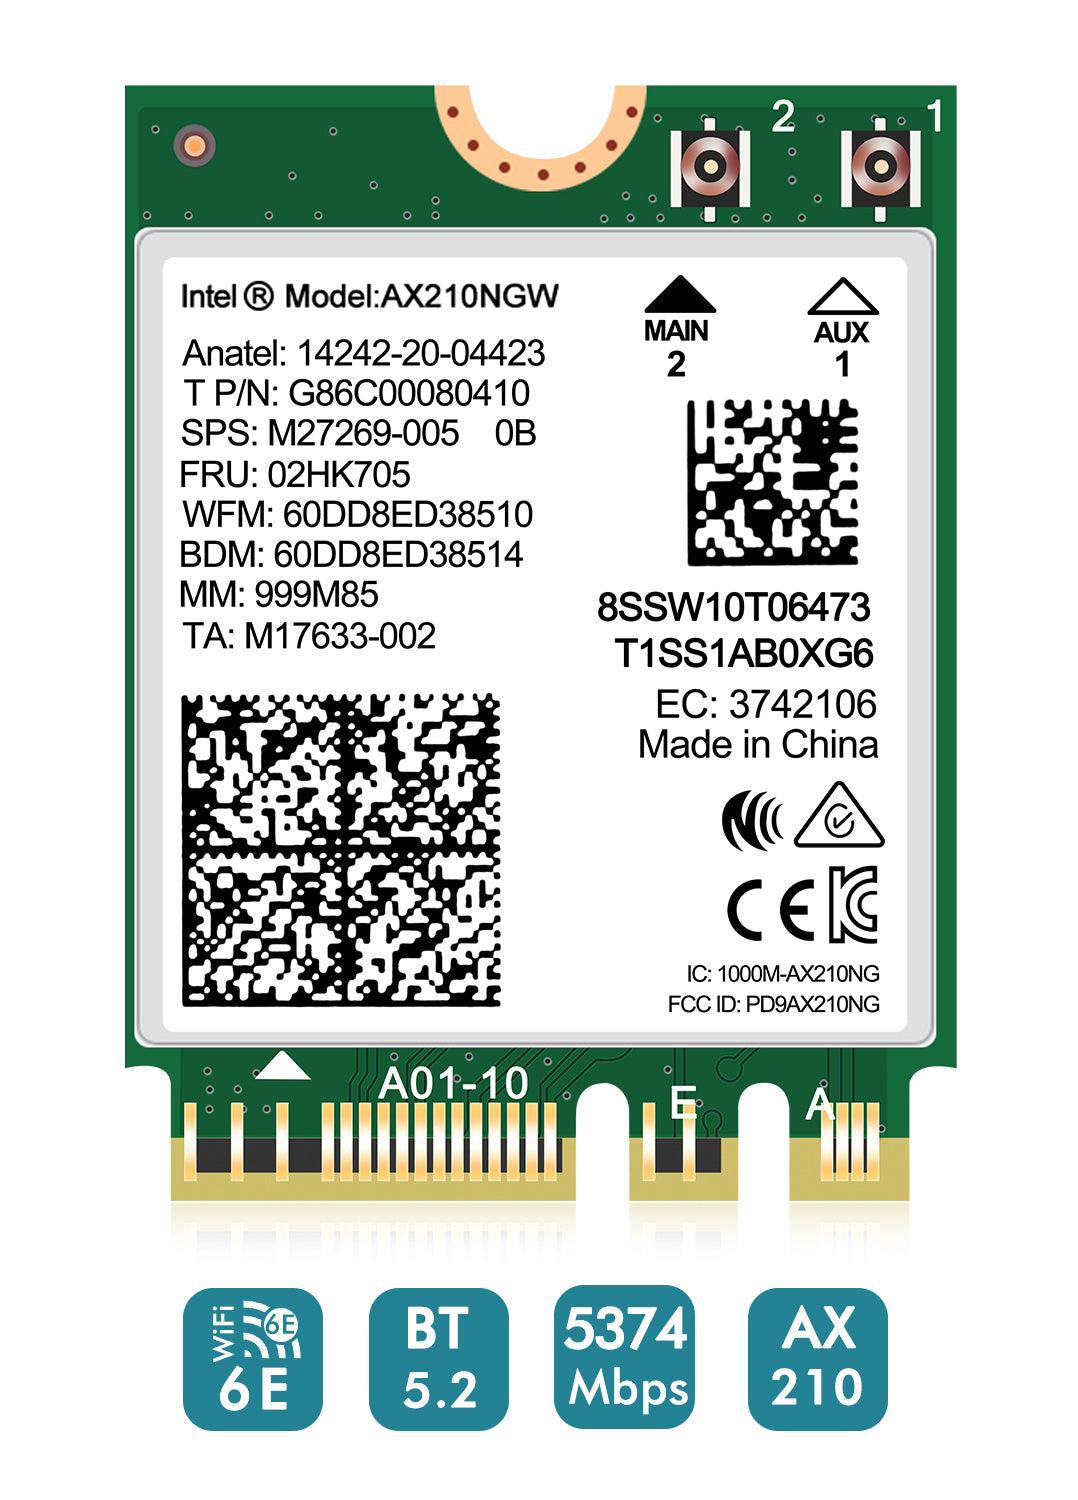 WiFi 6E Wireless Card Intel AX210 NGW Bluetooth 5.3 Tri-Band